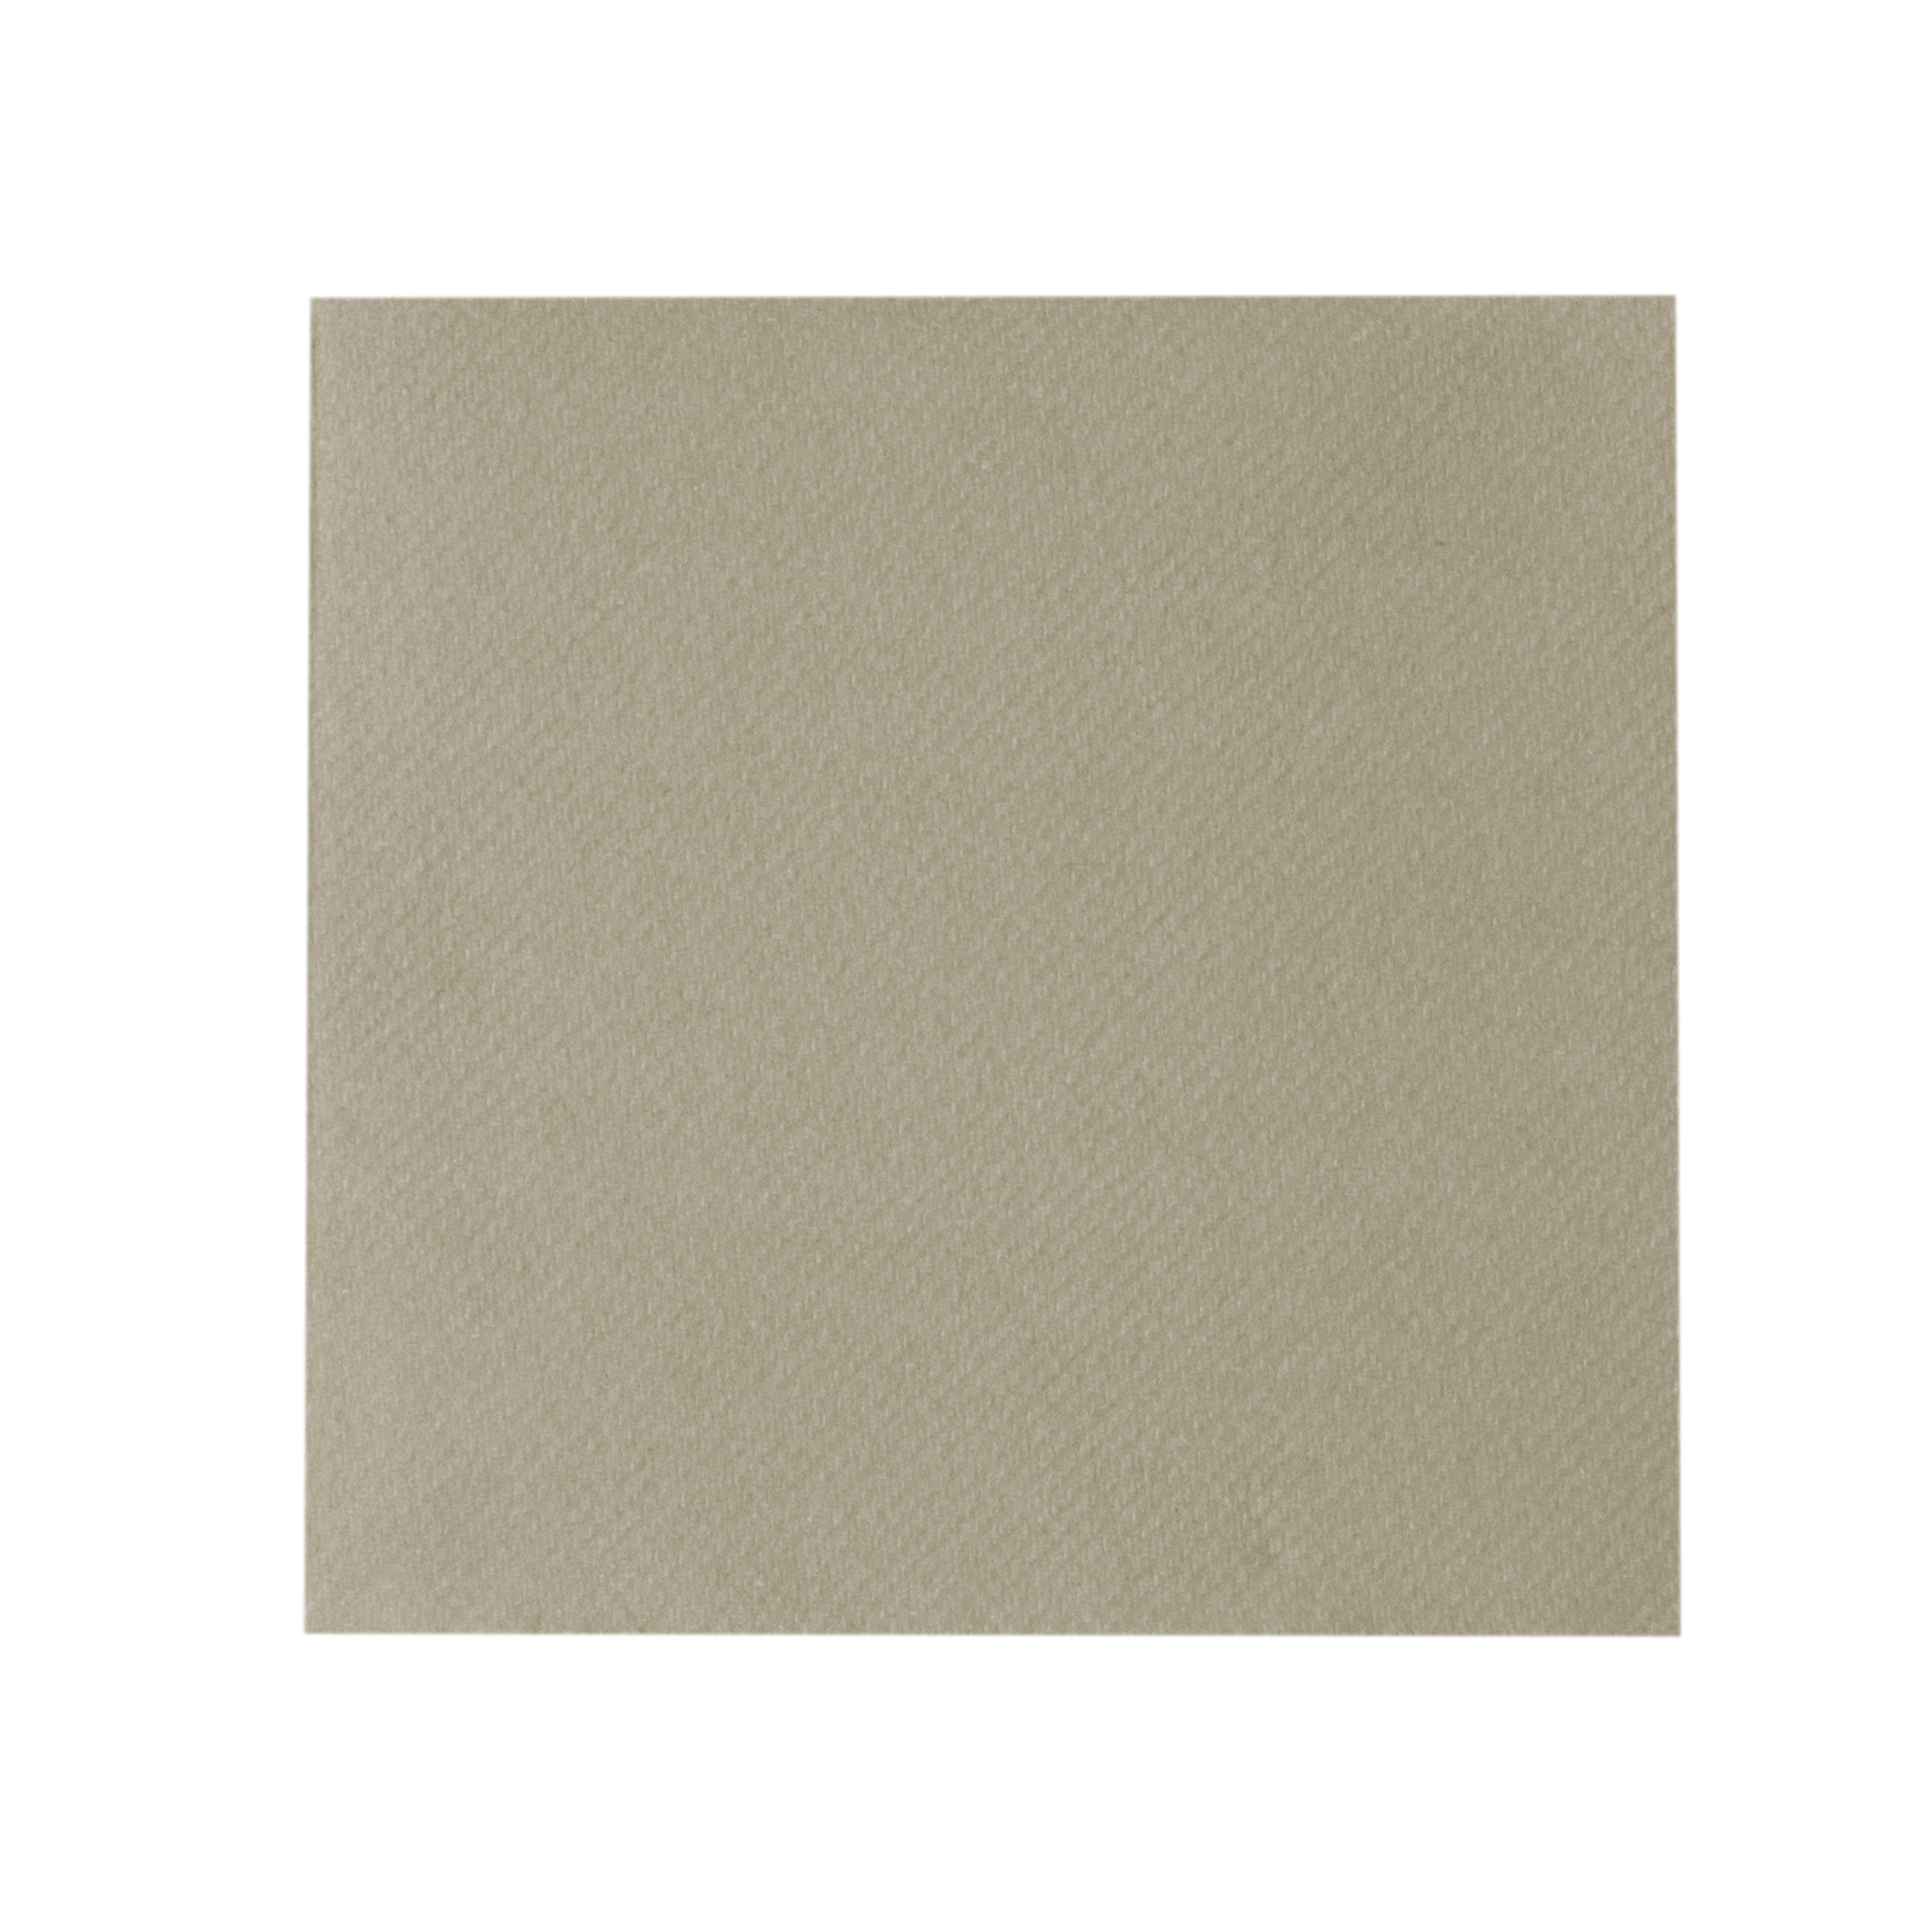 Mank Serviette Linclass-Light 1/4 Falz, 24 x 24 cm, Basic beige-grau